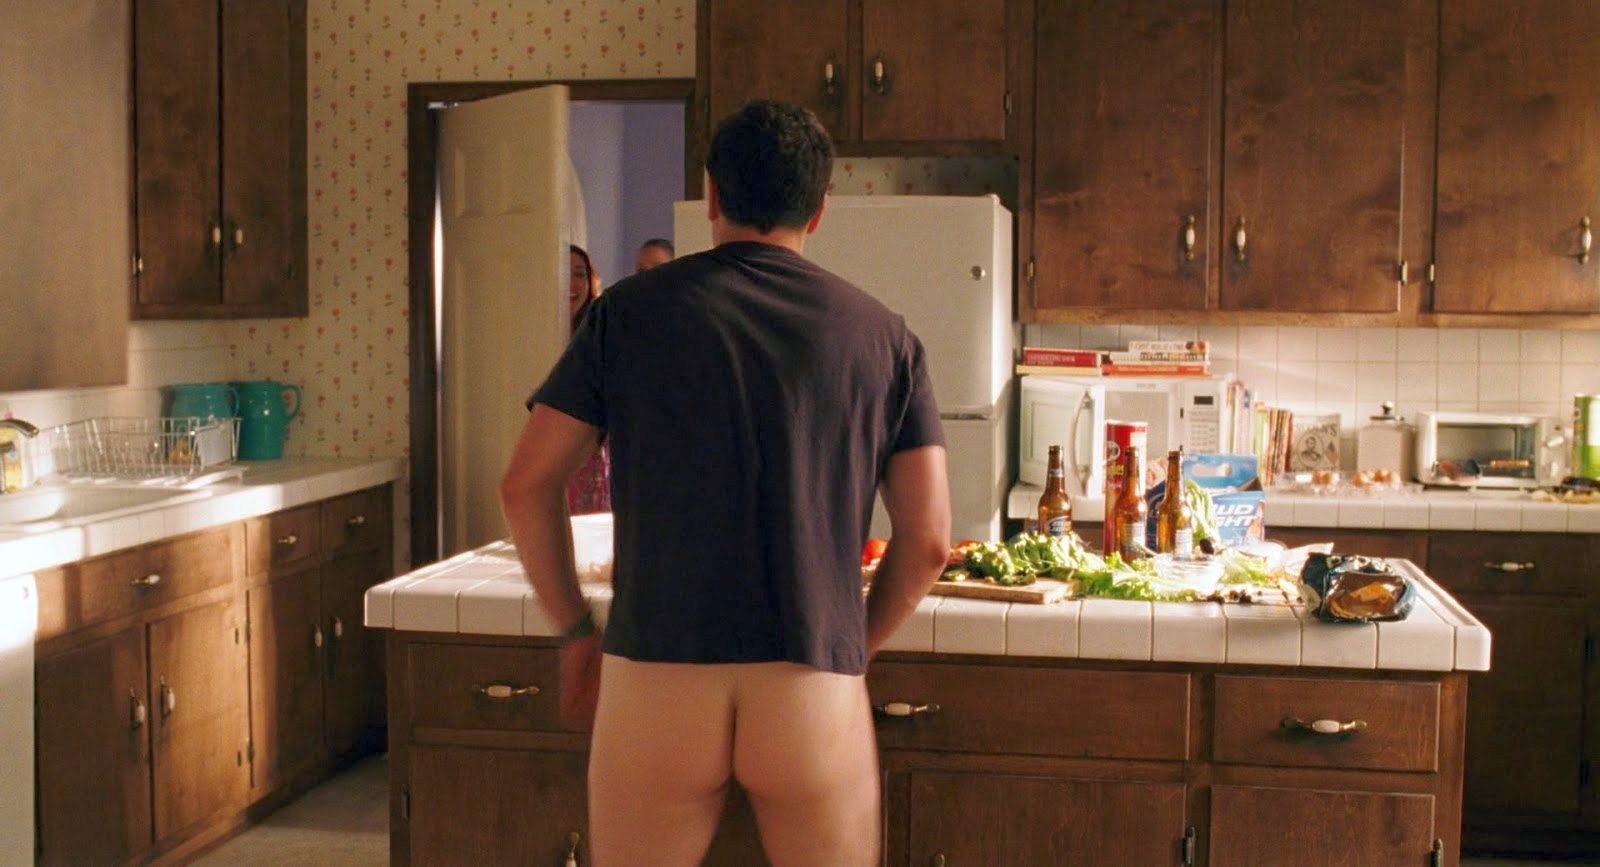 Jason Biggs nudo in "American Pie: Ancora insieme" (2012) .